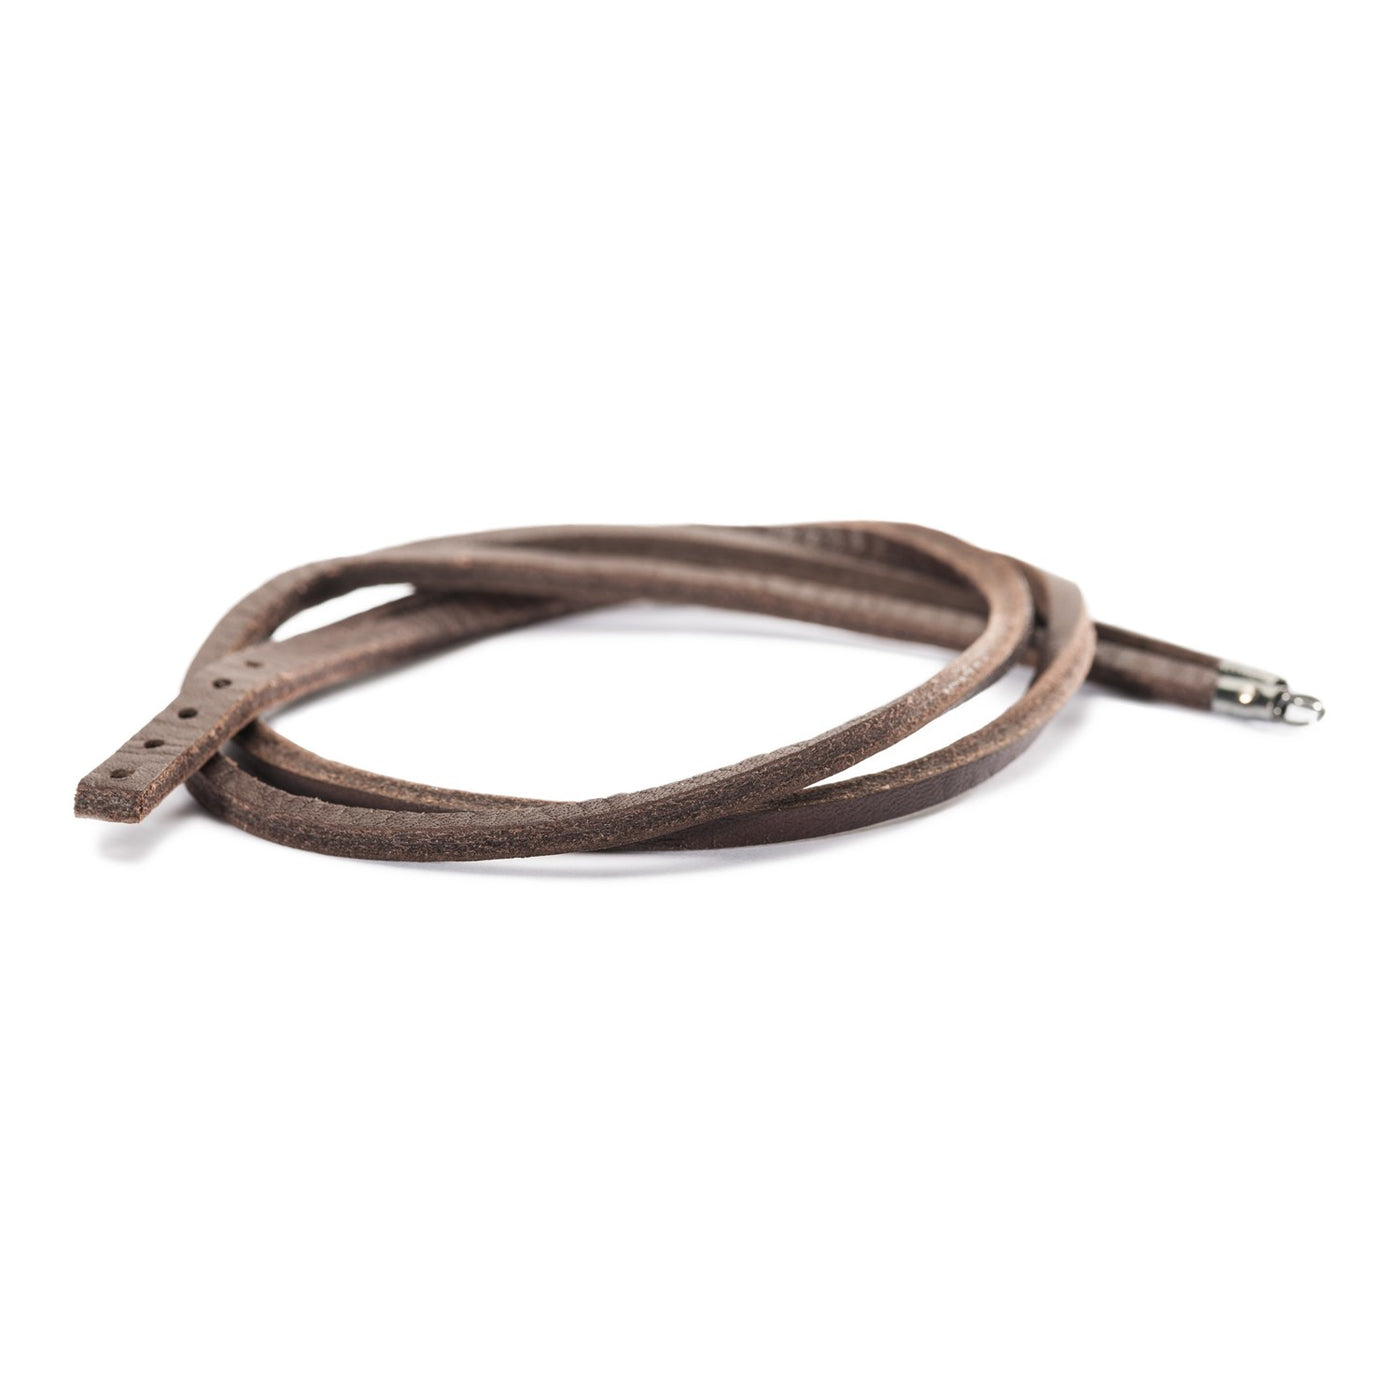 Leather Bracelet Brown/Silver